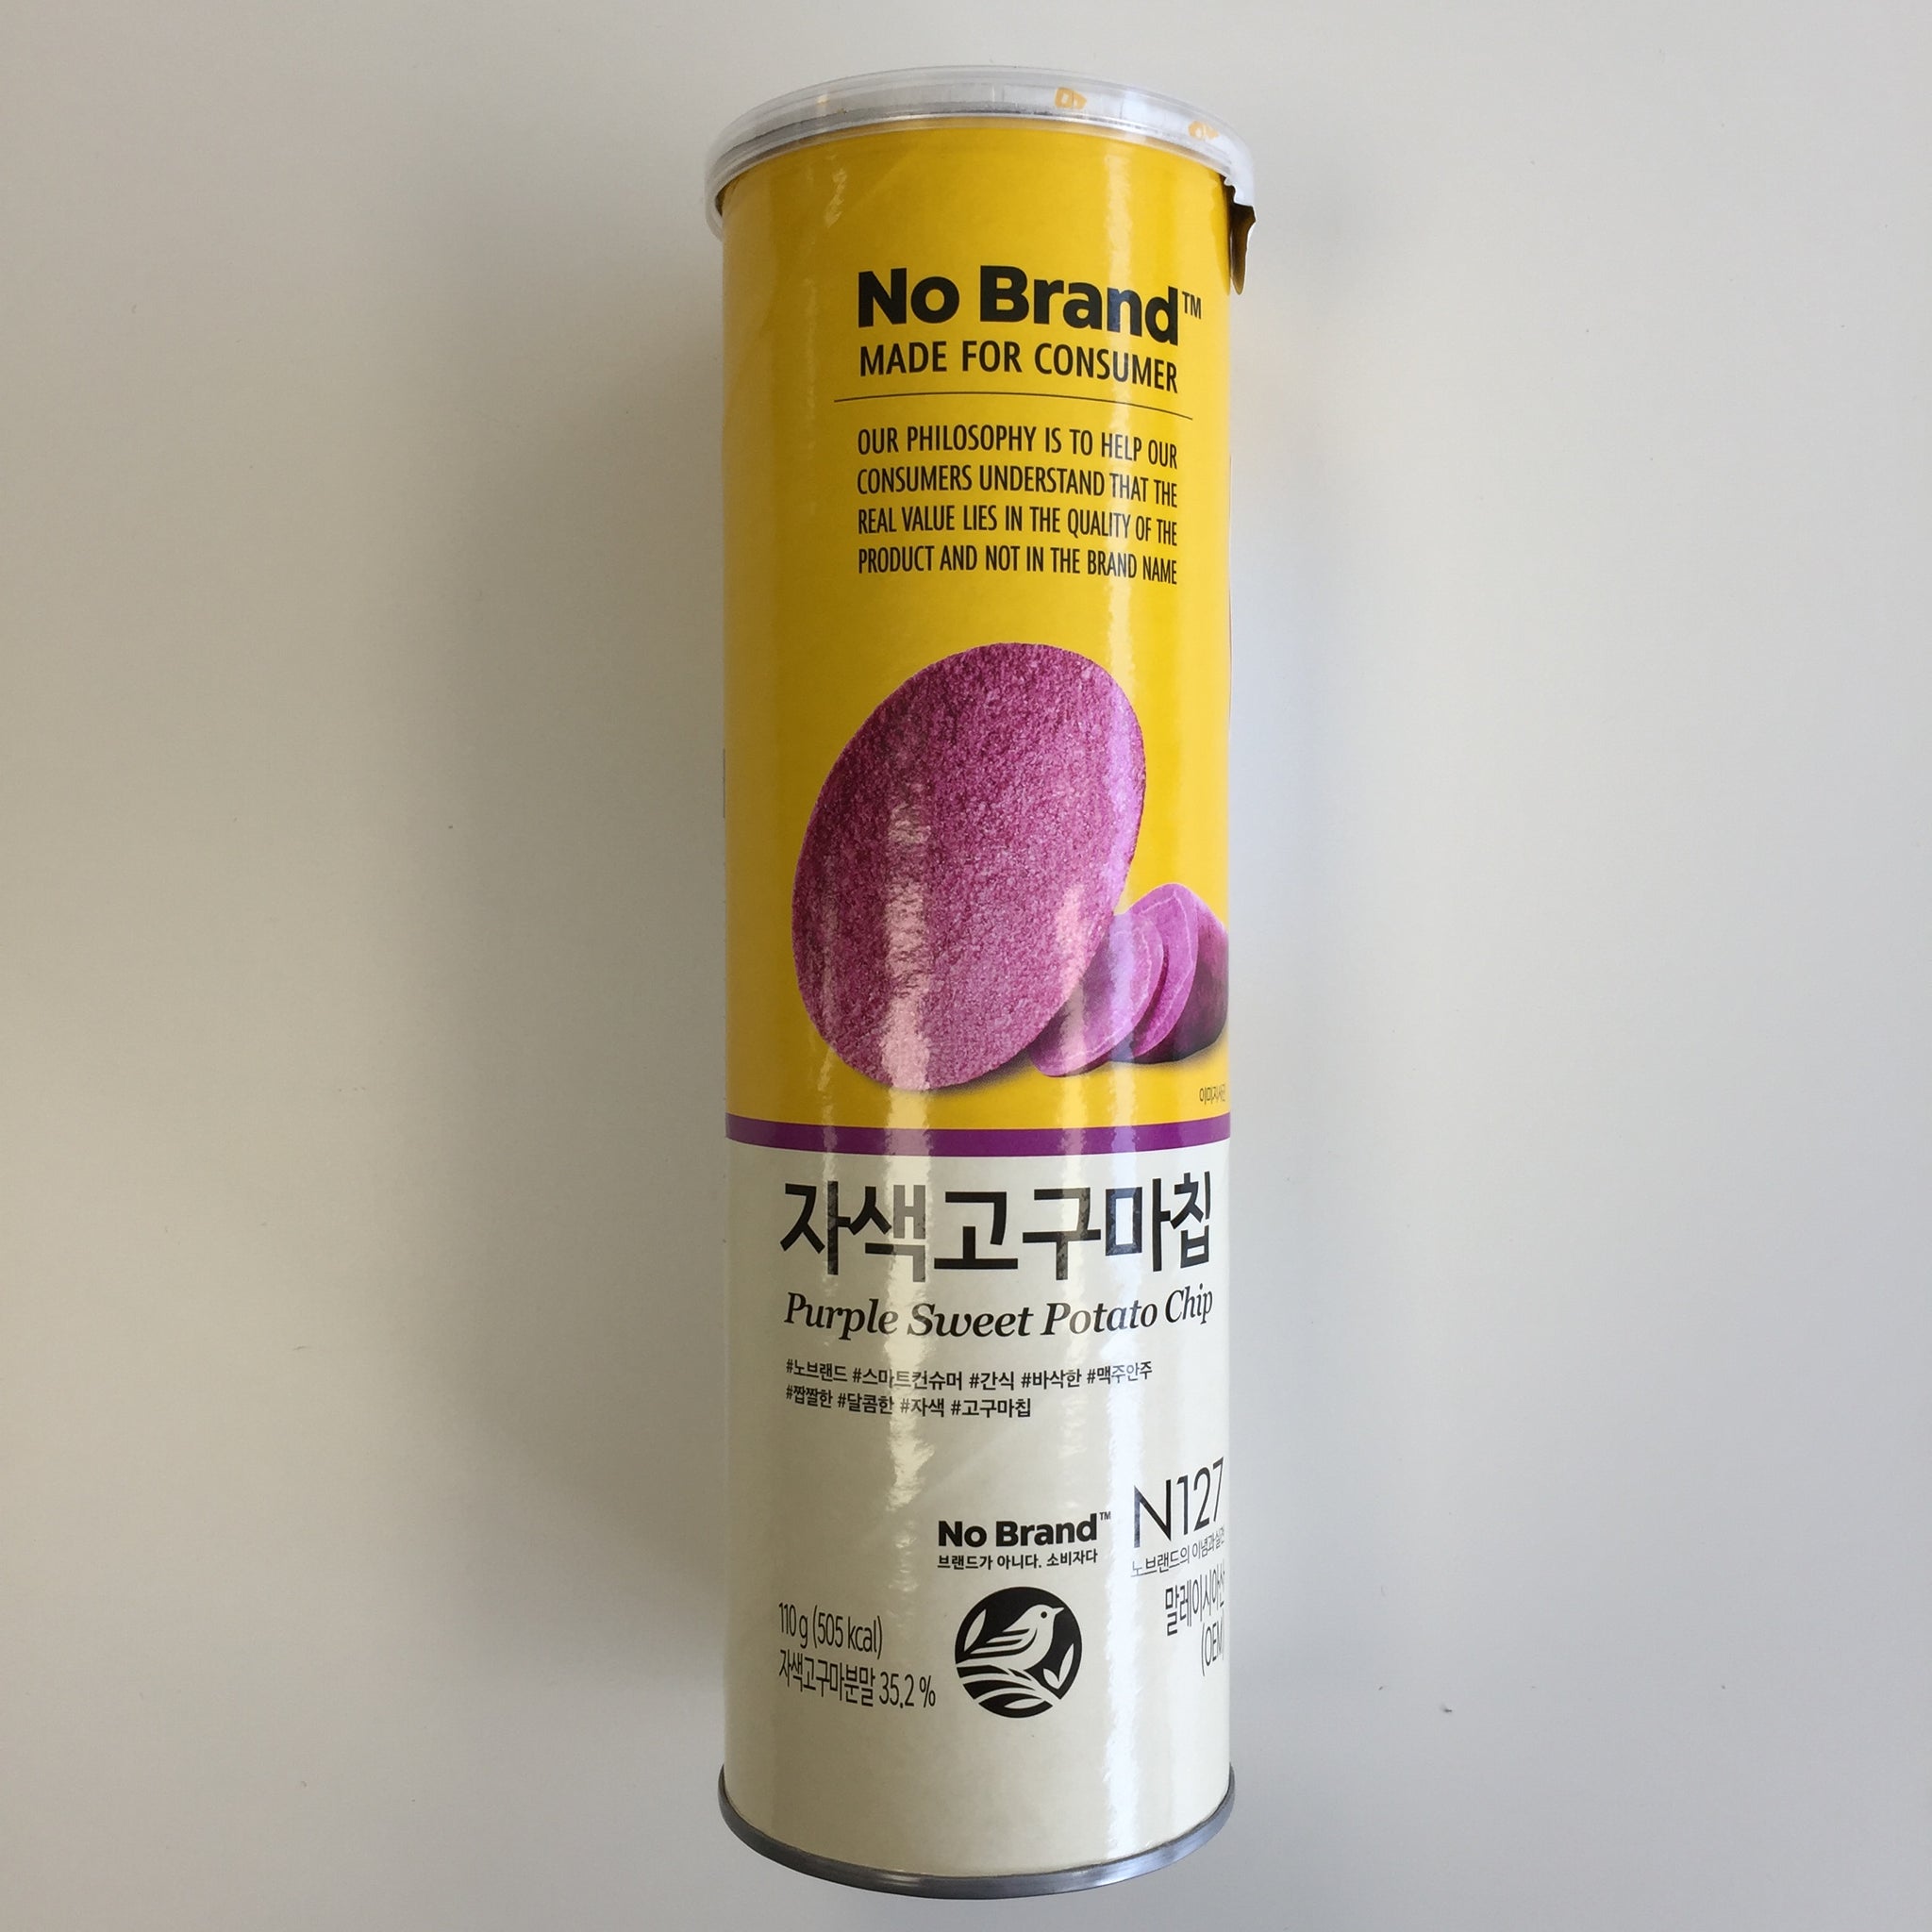 No Brand 紫薯薯片 110g (No Brand Purple Sweet Potato Chip 110g